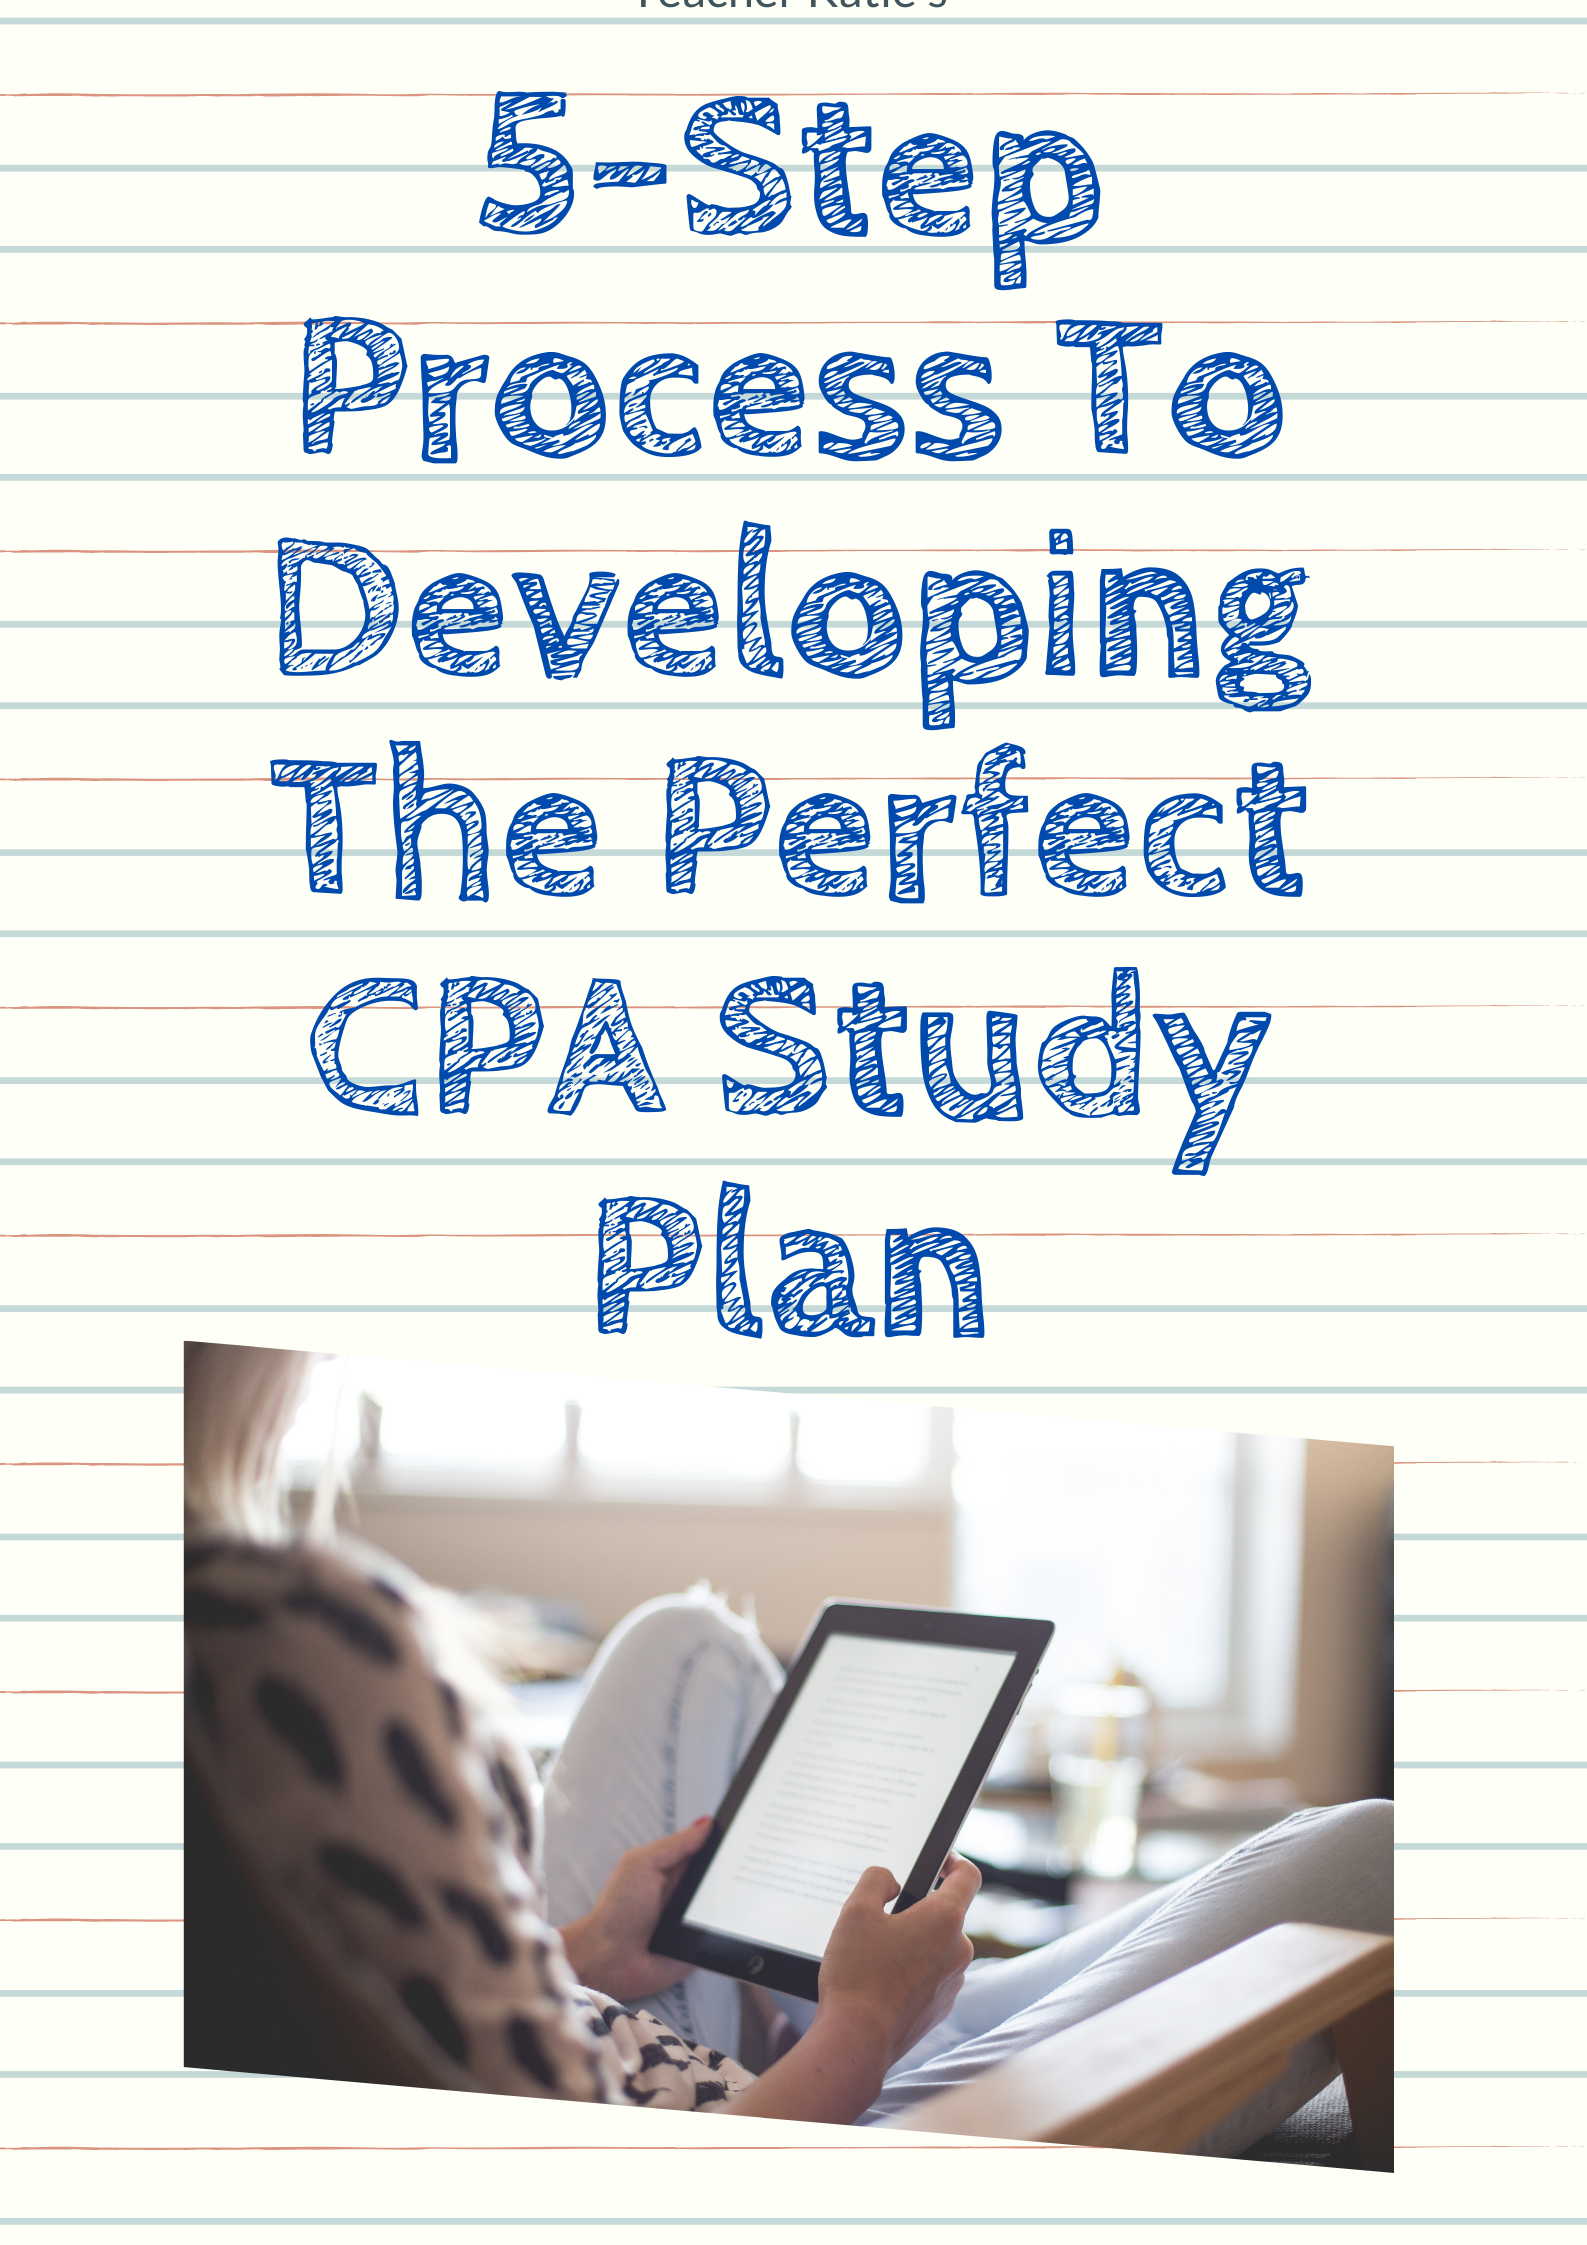 cpa-study-plan-template